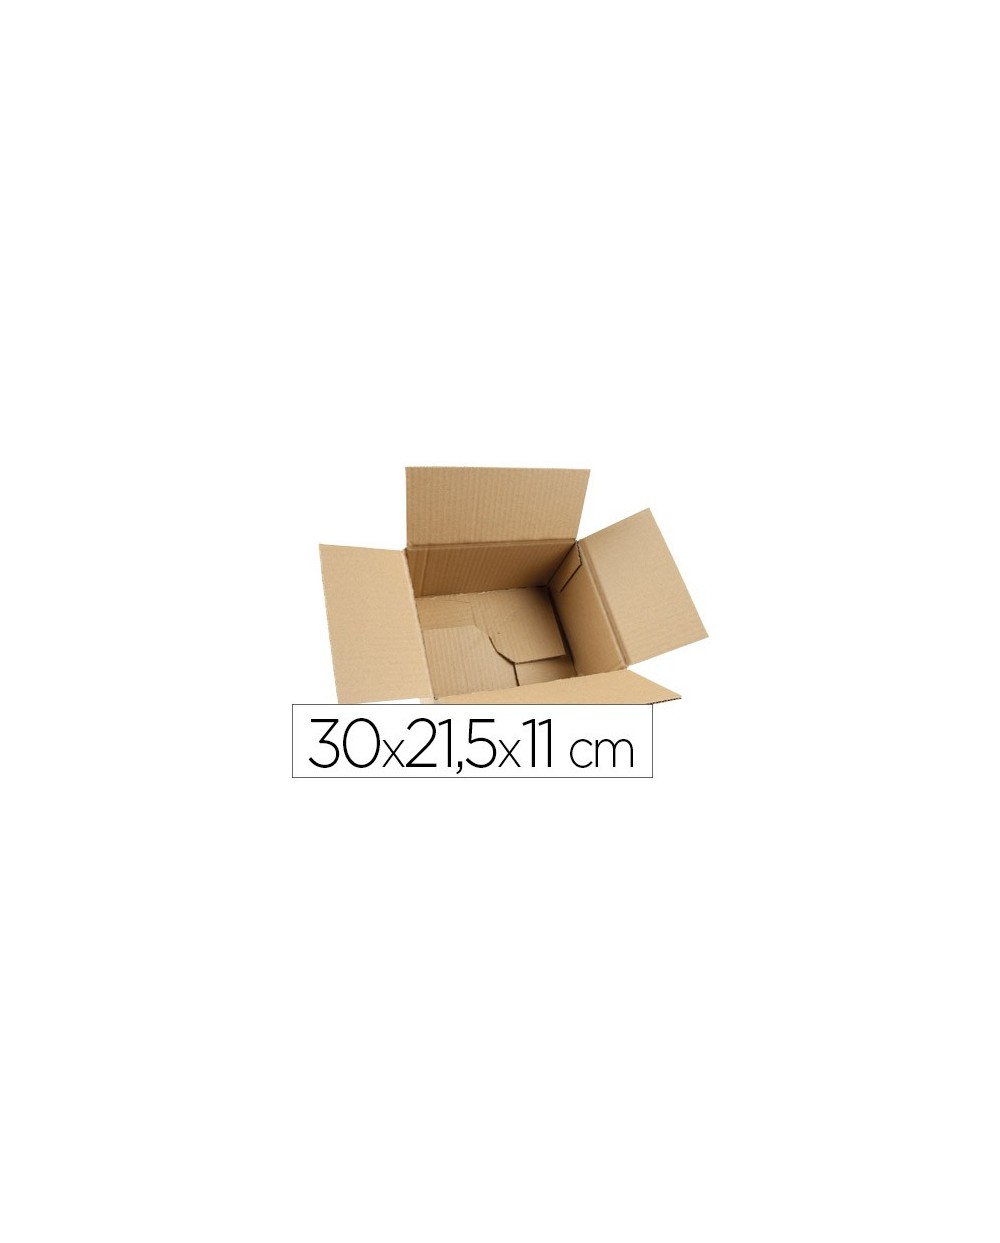 Caja para embalar q connect fondo automatico medidas 300x215x110 mm espesor carton 3 mm